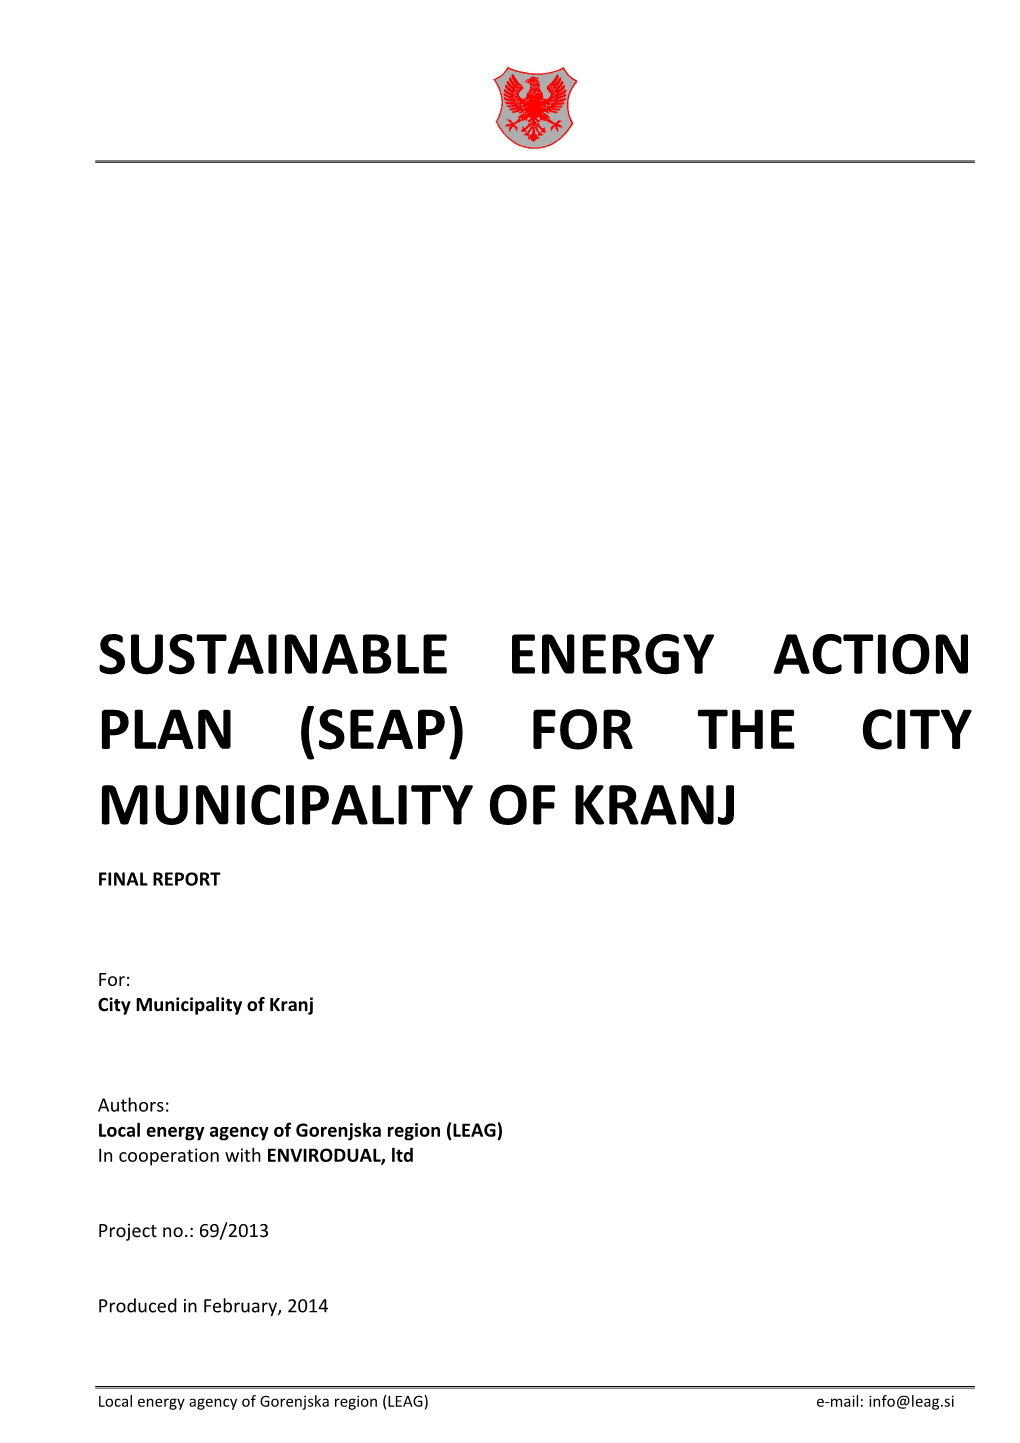 Seap) for the City Municipality of Kranj